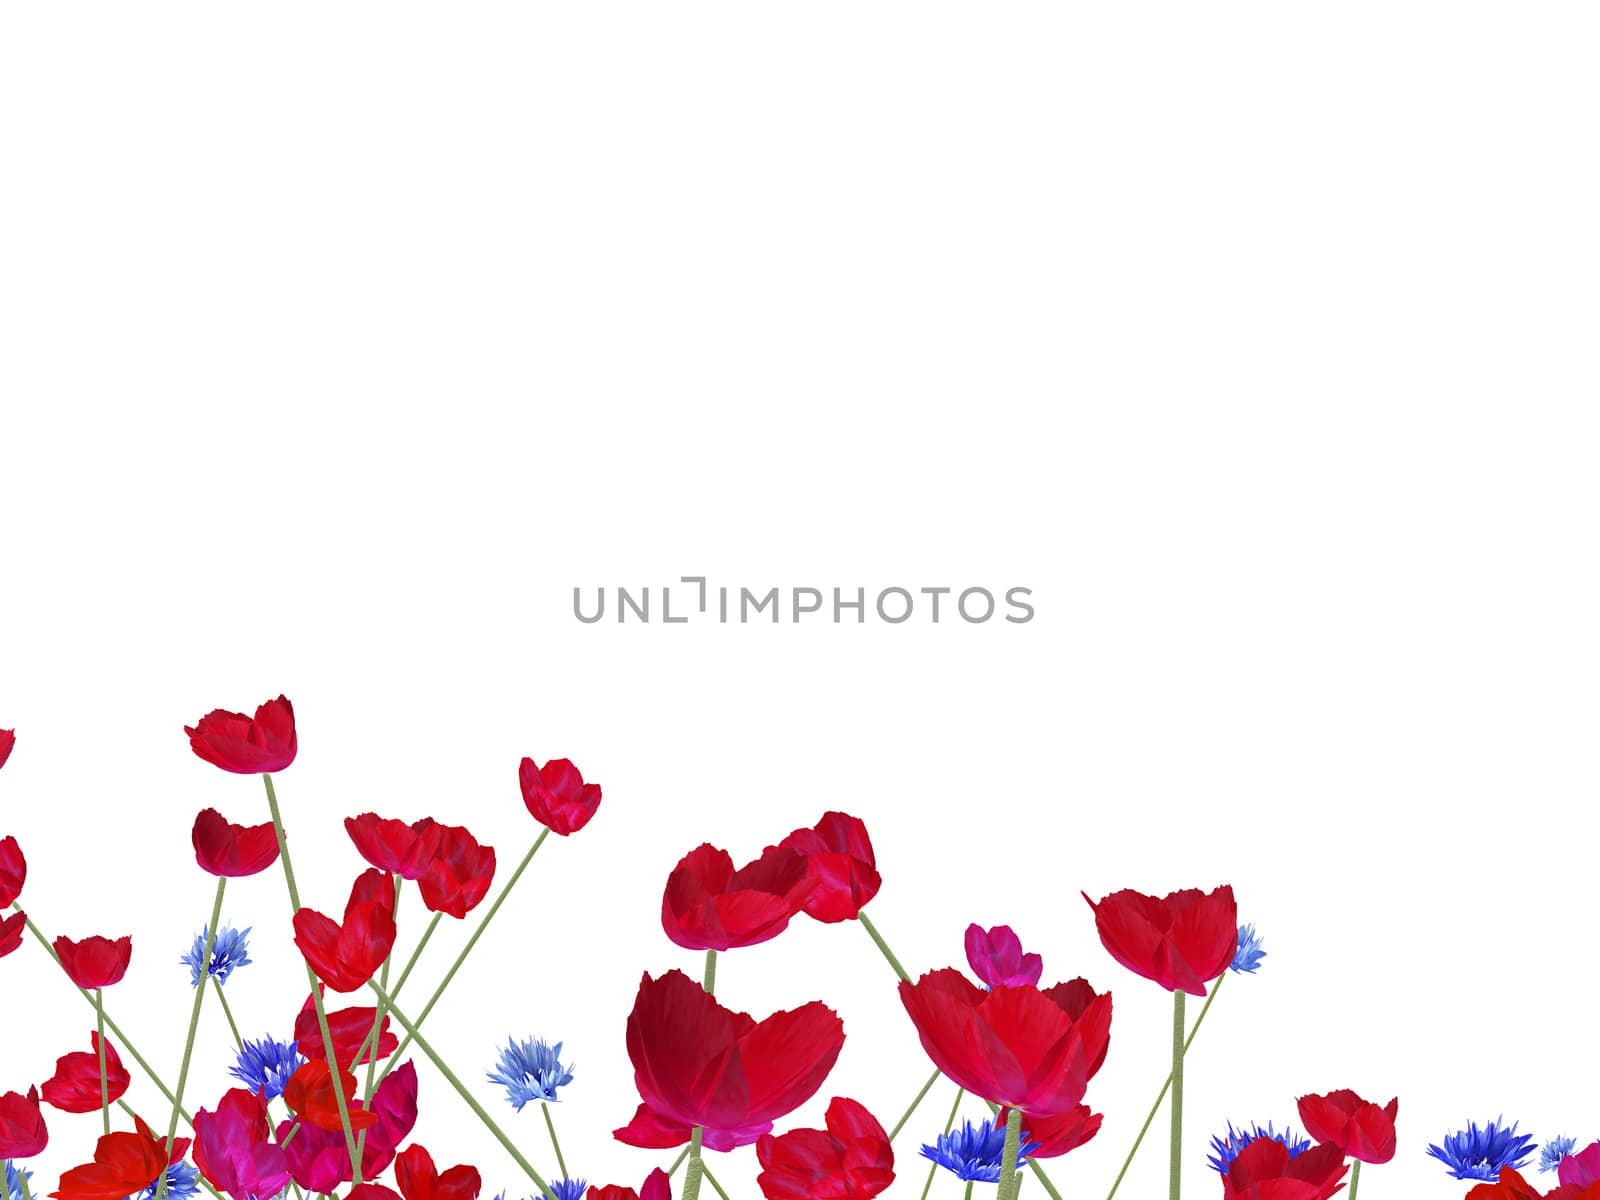 red poppy and blue cornflower background on white